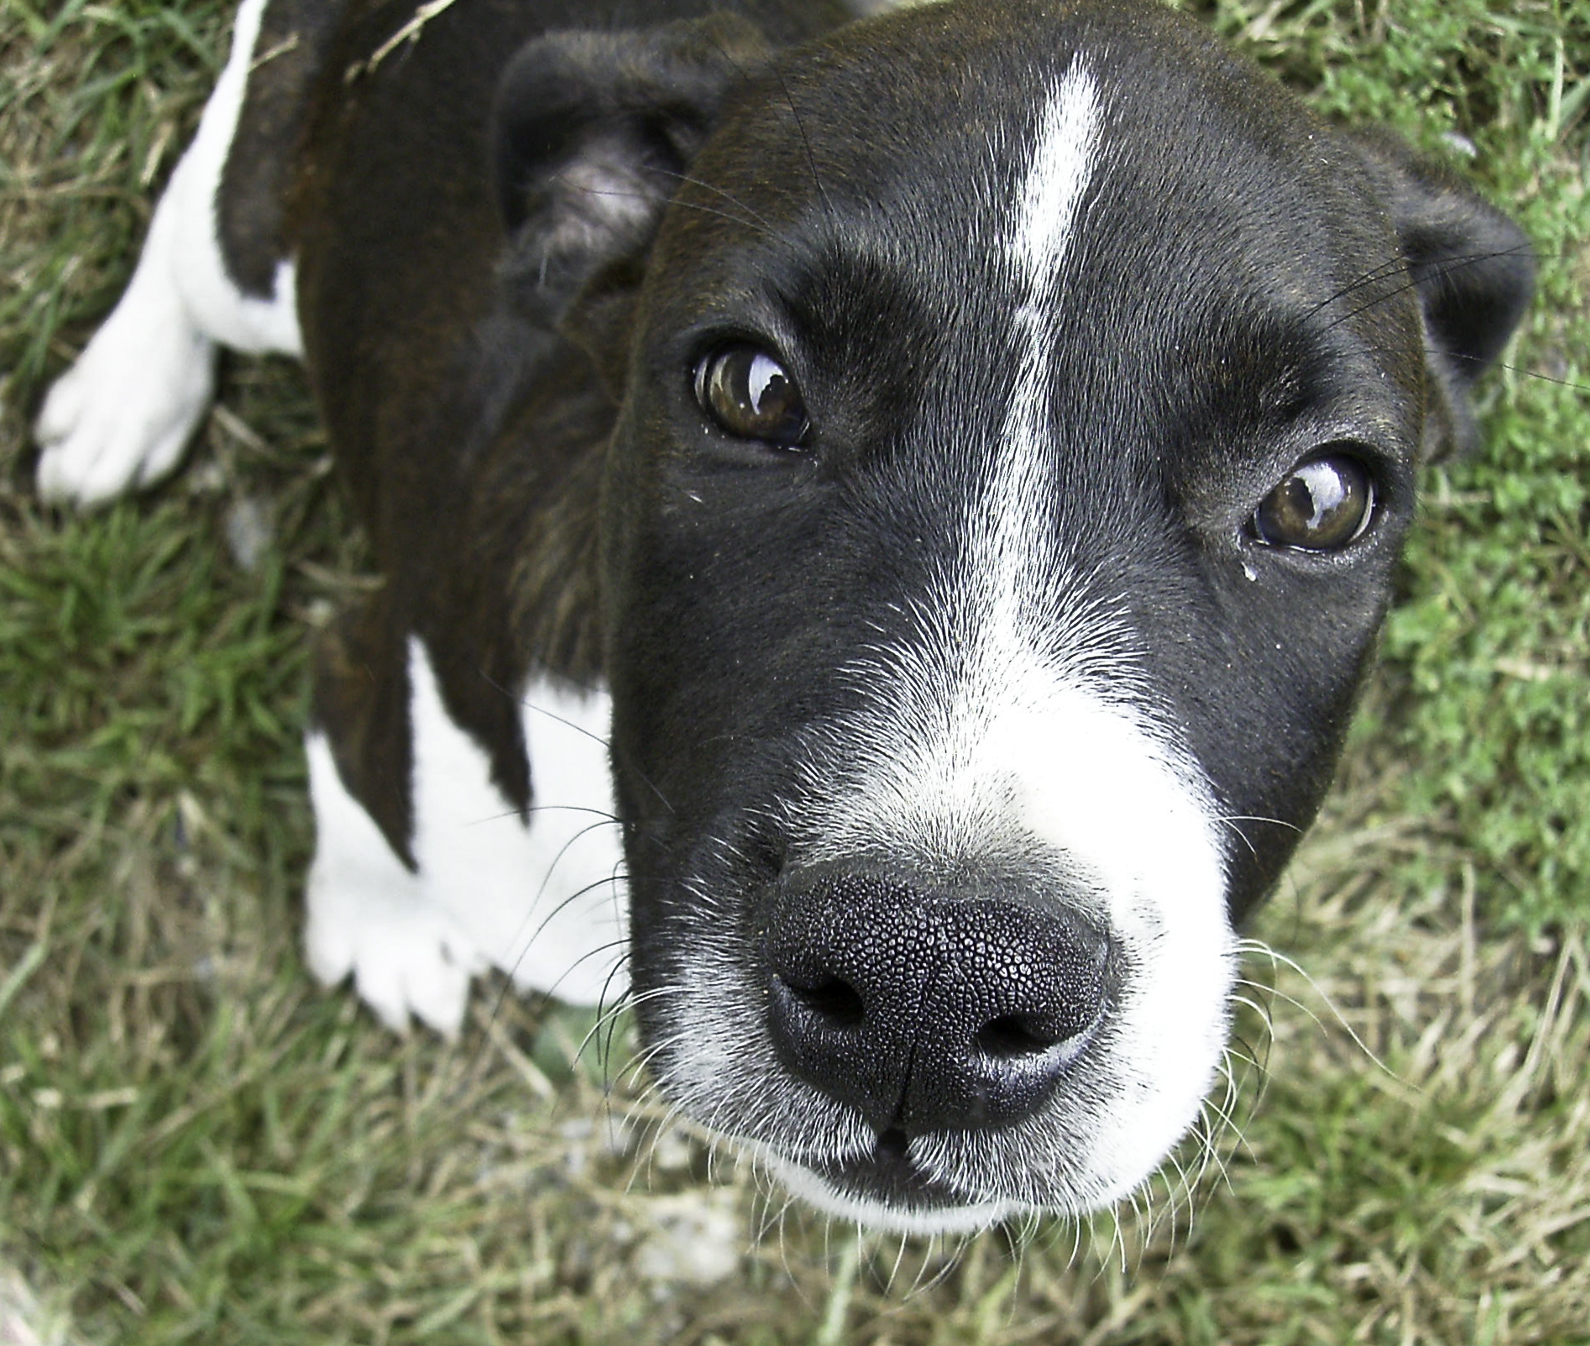 File:Puppy Up Close.jpg - Wikipedia